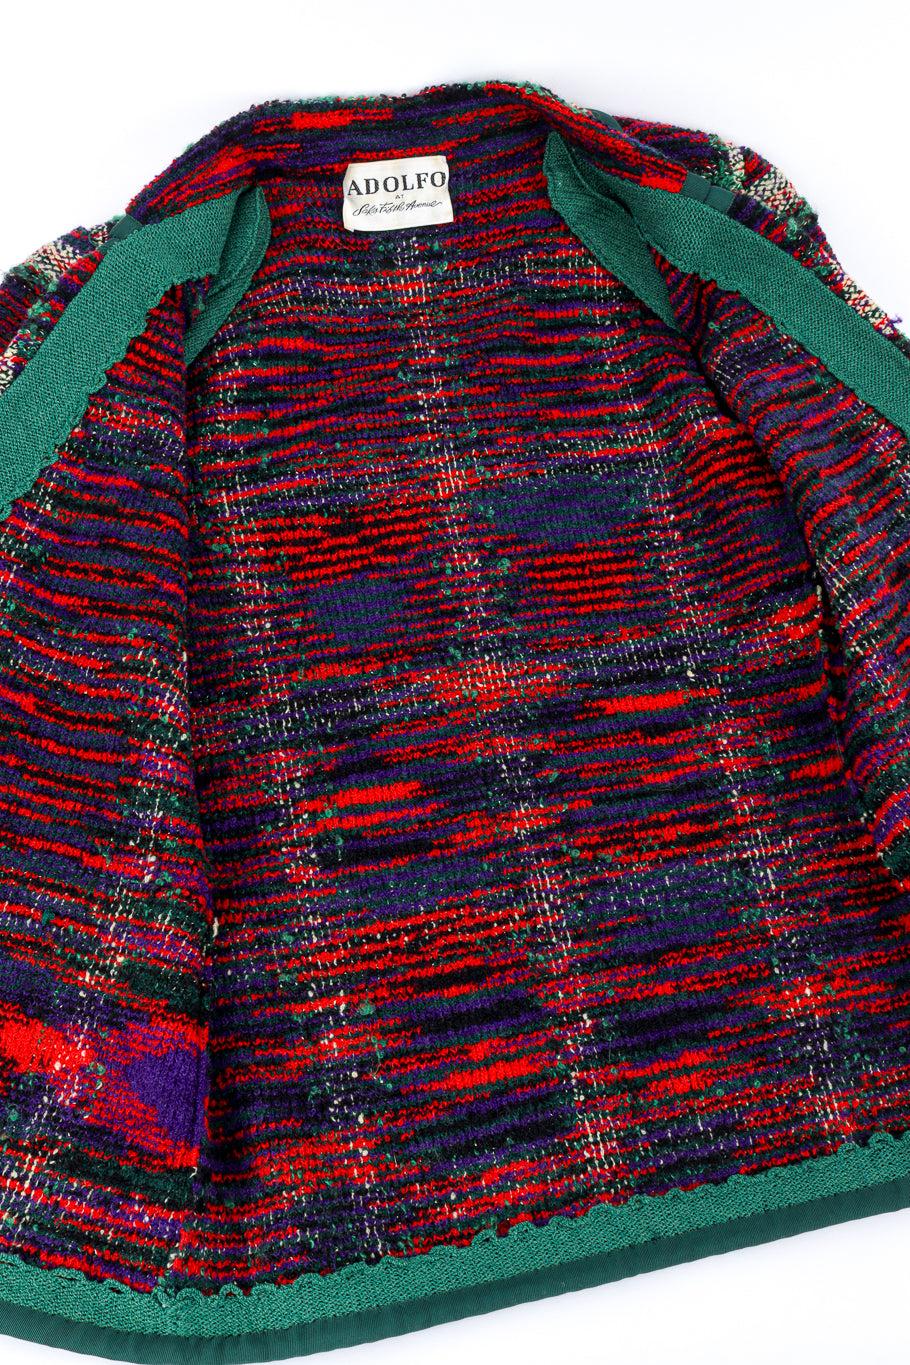 Vintage Adolfo Plaid Knit Jacket interior view @recessla